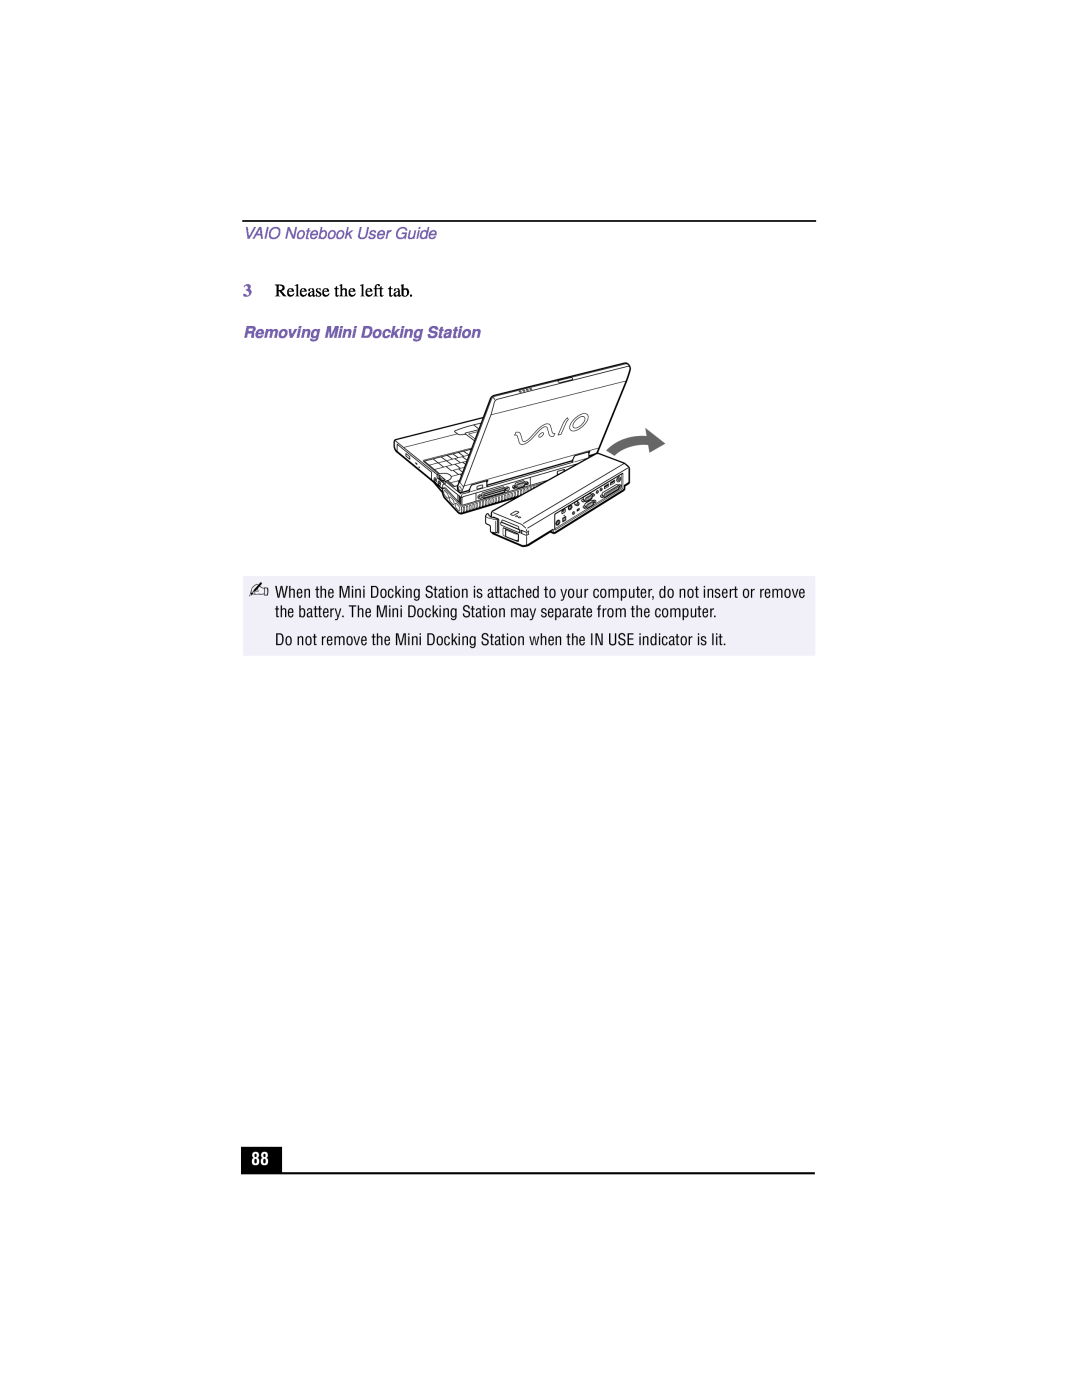 Sony PCG-XG700K, PCG-XG500K manual Release the left tab, VAIO Notebook User Guide, Removing Mini Docking Station 